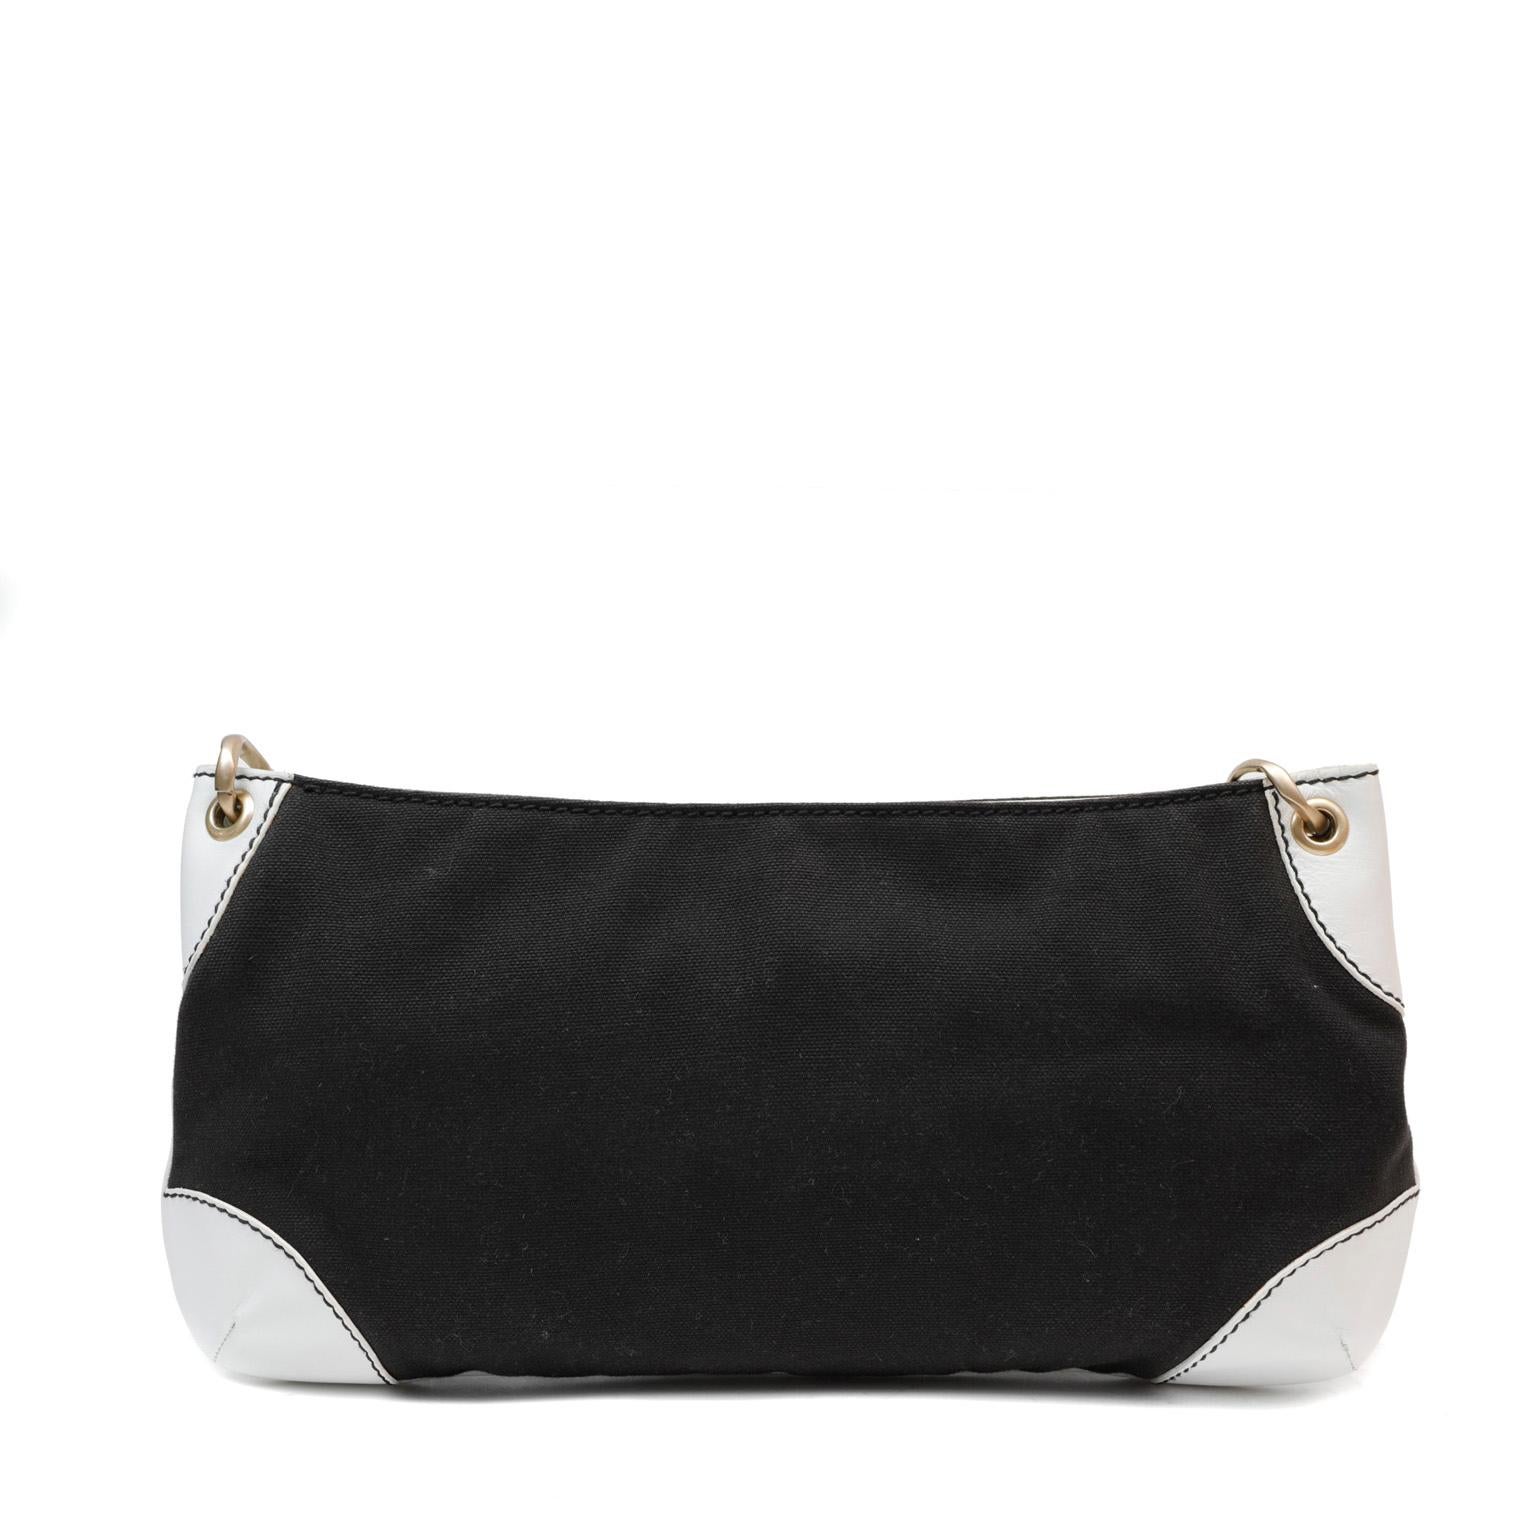 Chanel Black Canvas Olsen Shoulder Bag In Good Condition For Sale In Palm Beach, FL